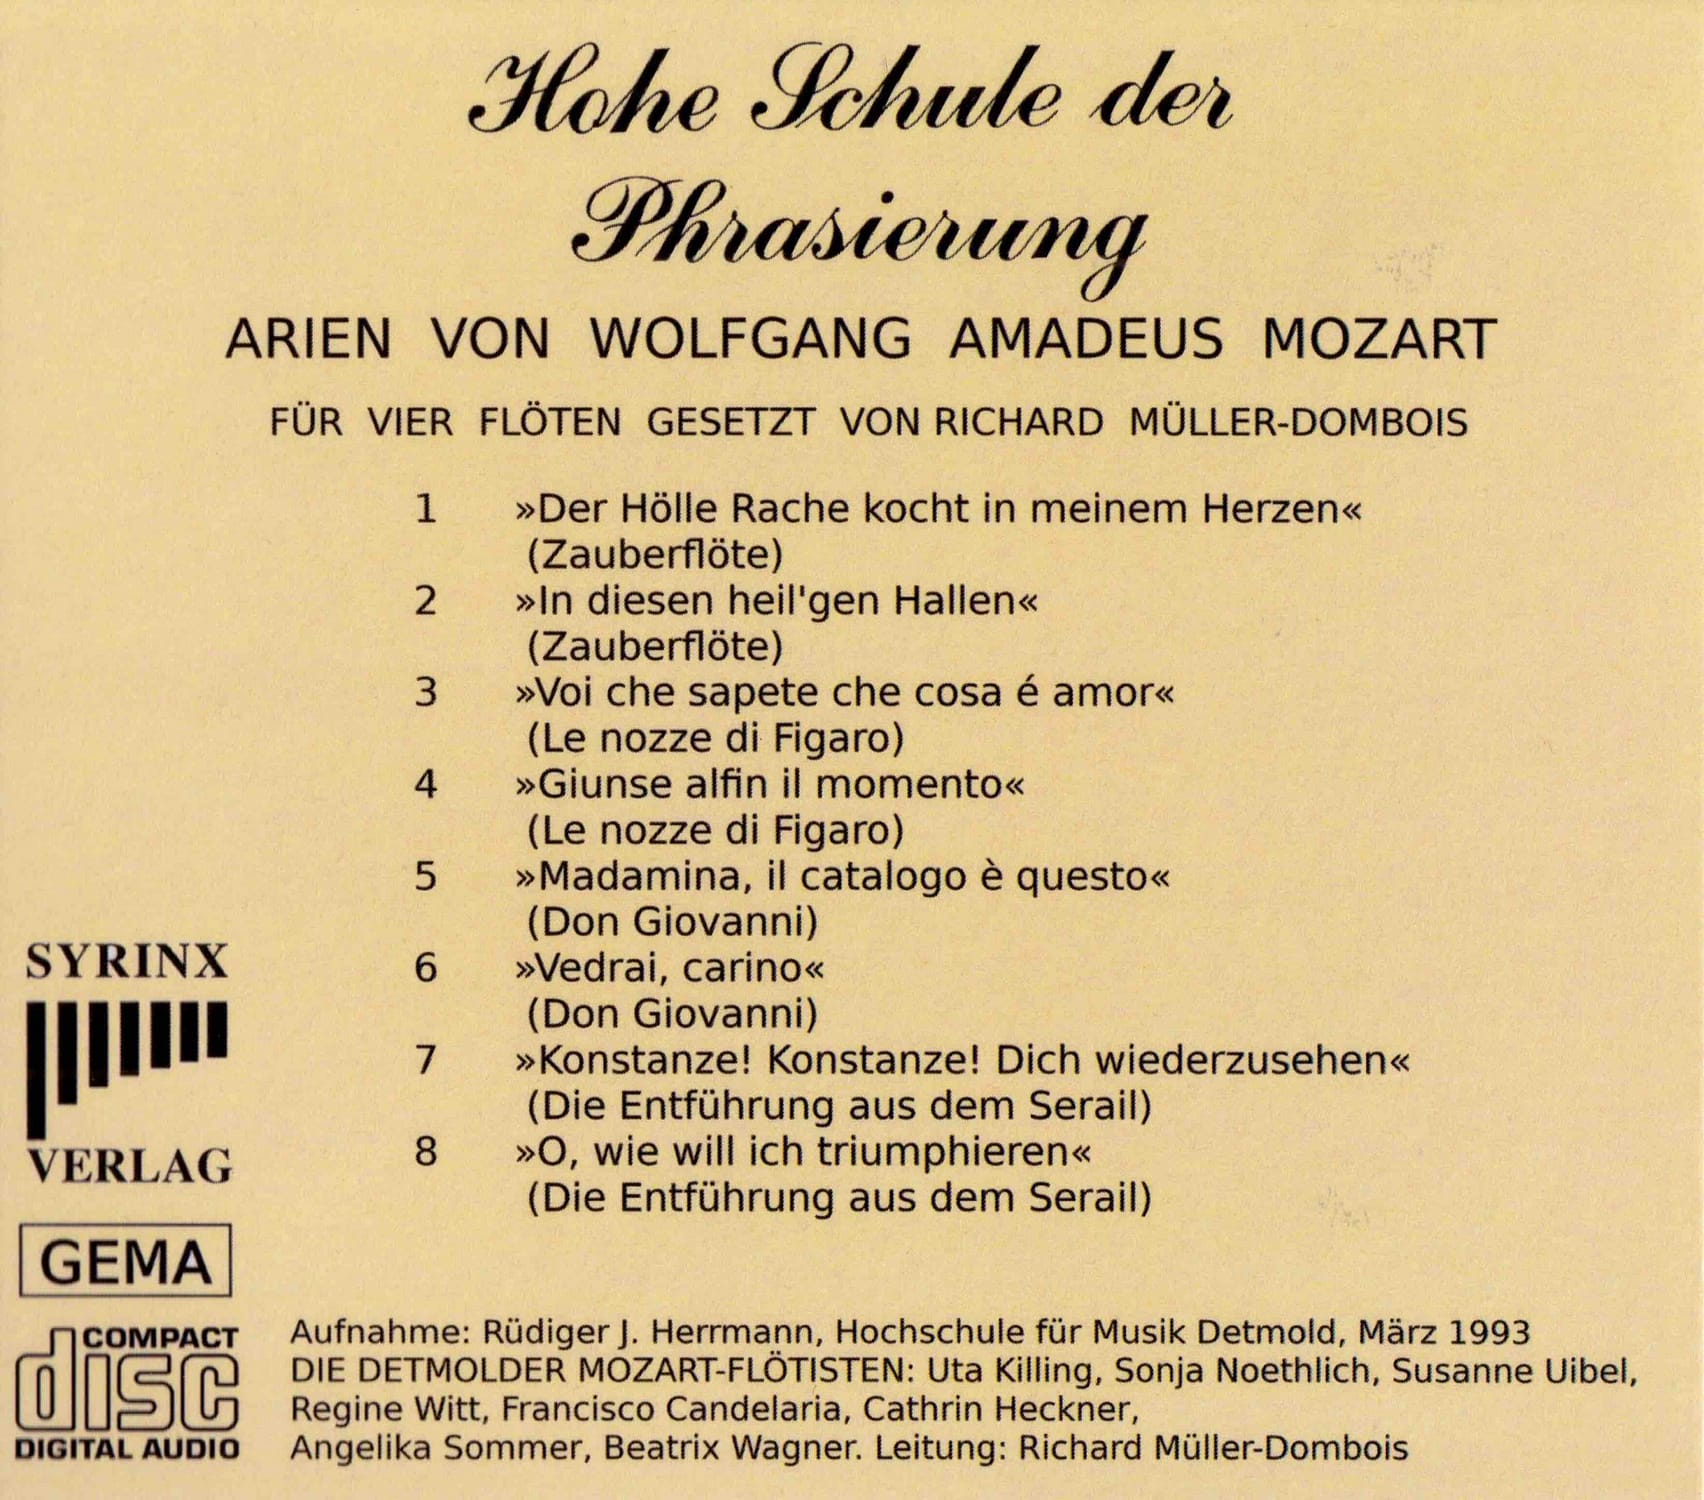 Syrinx Nr. 120a / Hohe Schule der Phrasierung (Compact Disc)
Demonstrations-CD der Detmolder Mozart-Flötisten